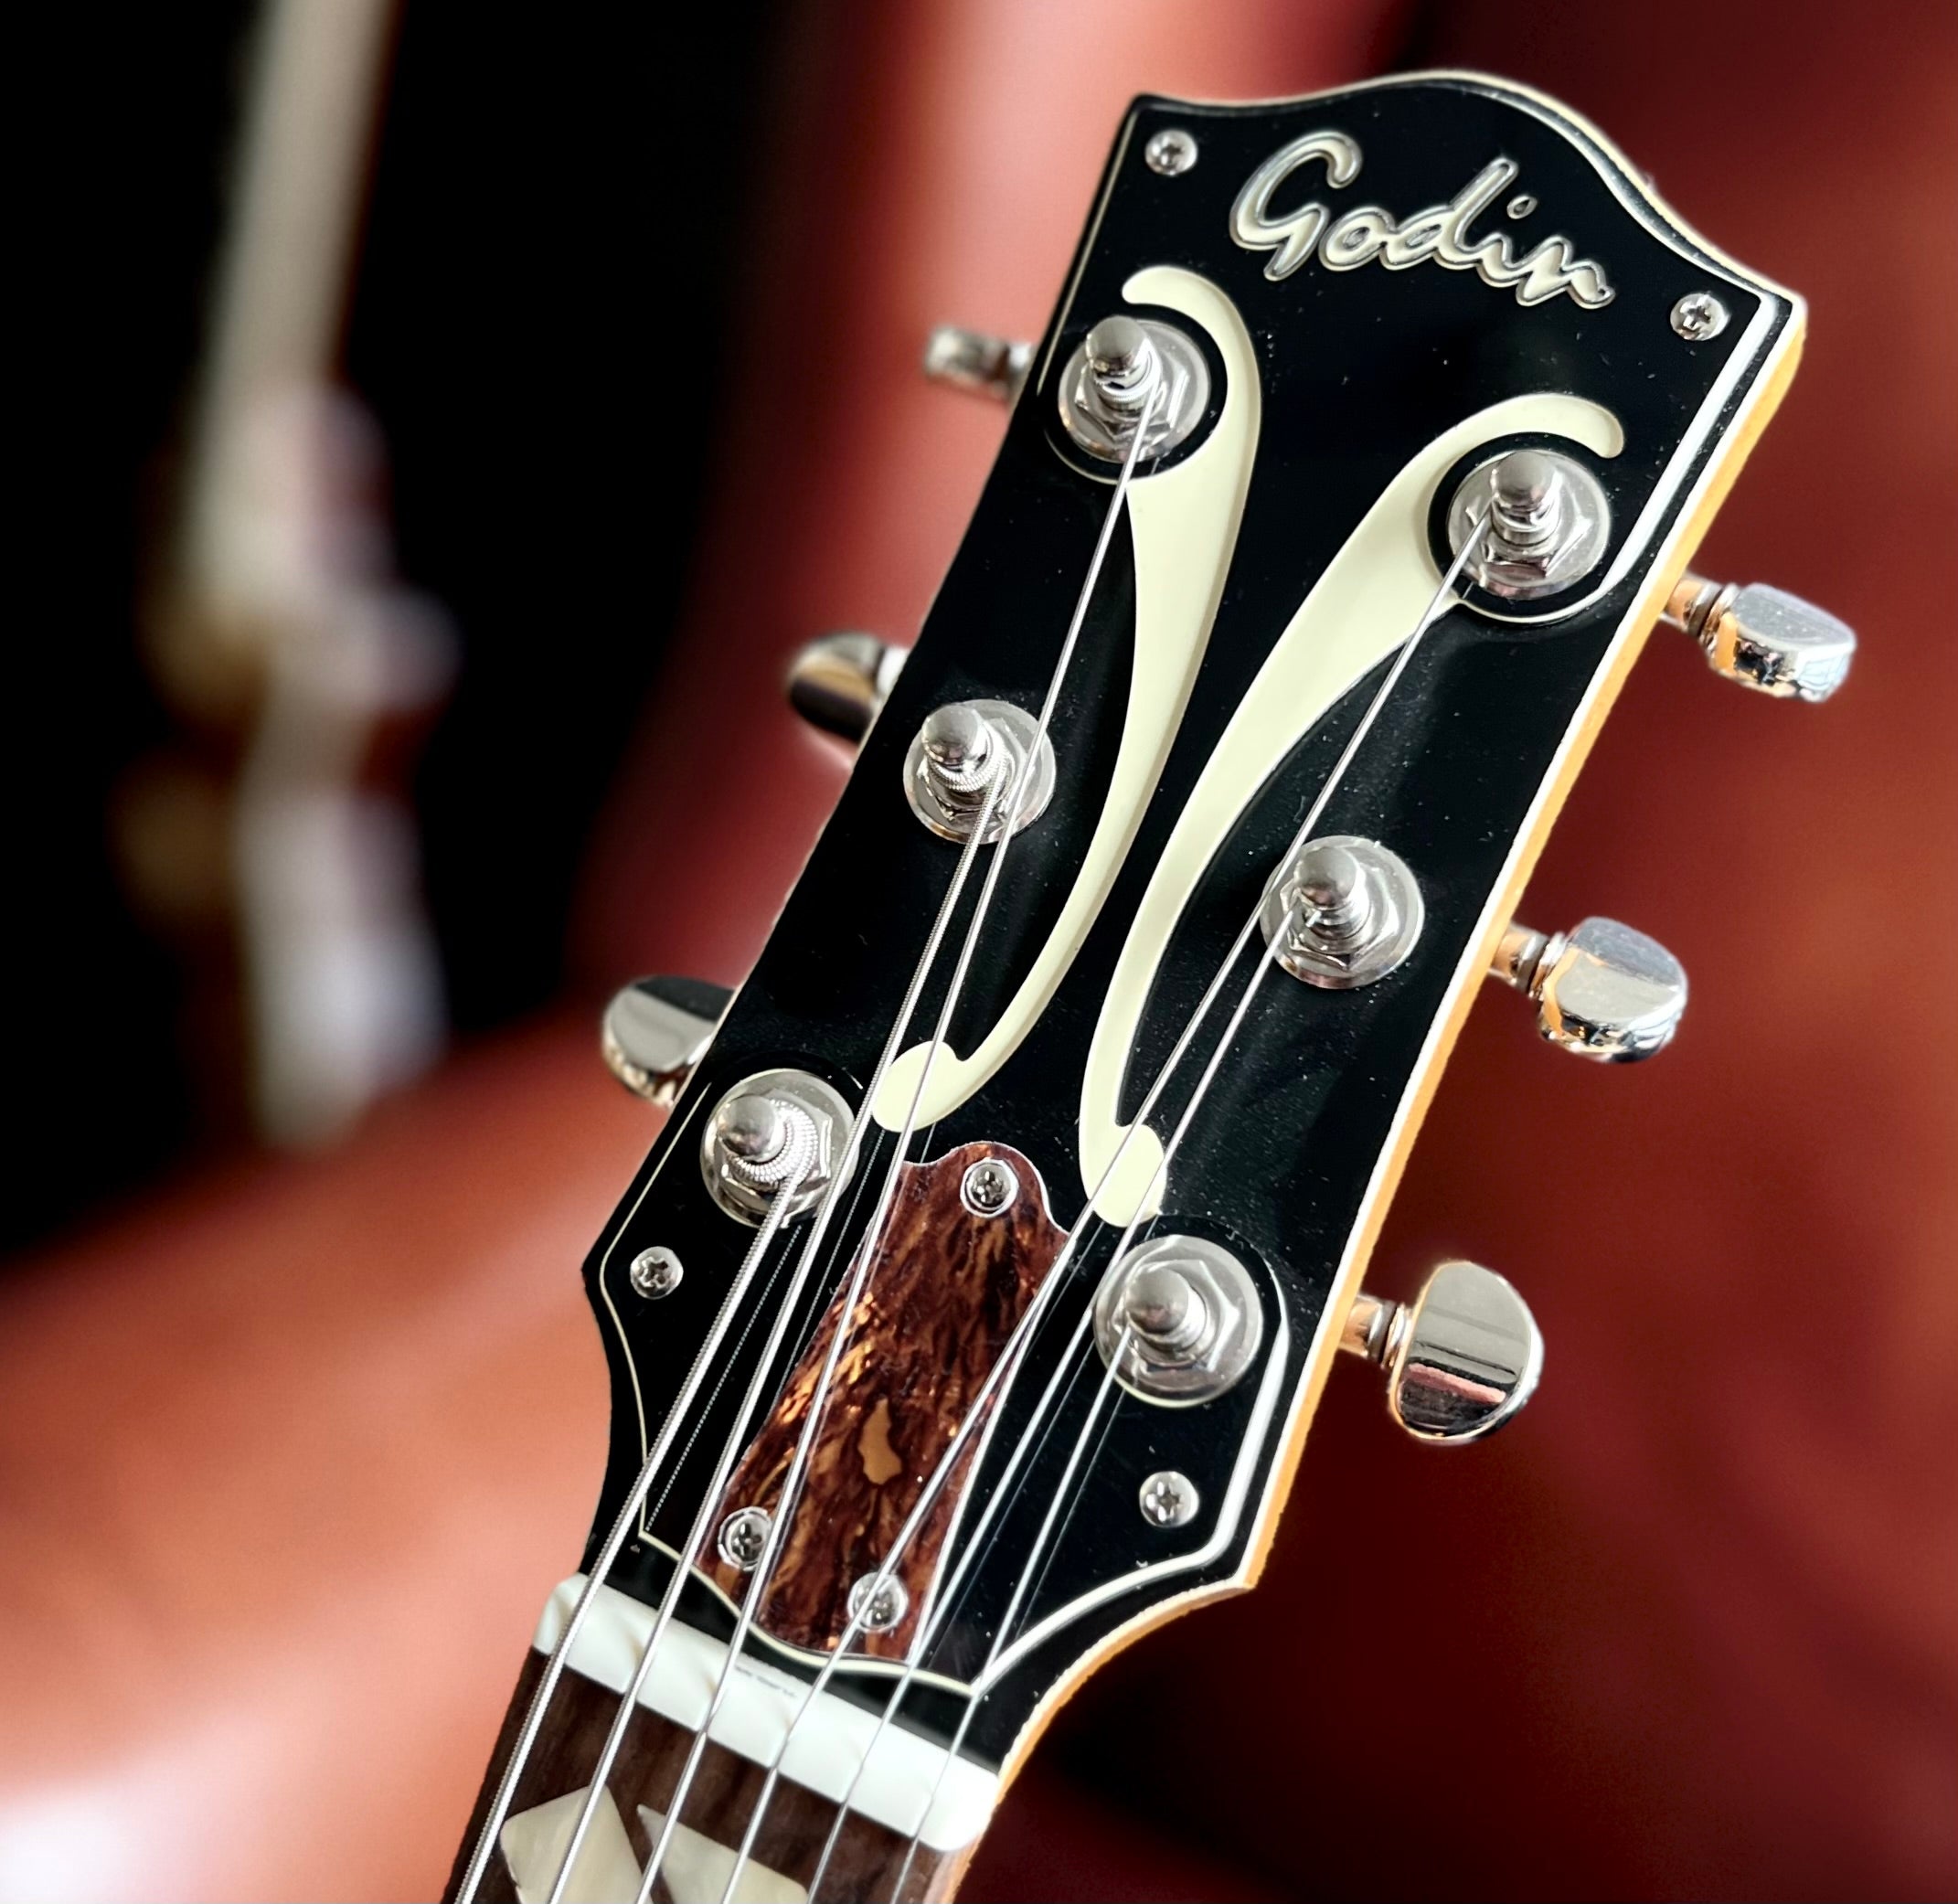 Godin 5th Avenue Jumbo P90 Semi-Acoustic Guitar ~ Harvest Gold, Electric Guitar for sale at Richards Guitars.